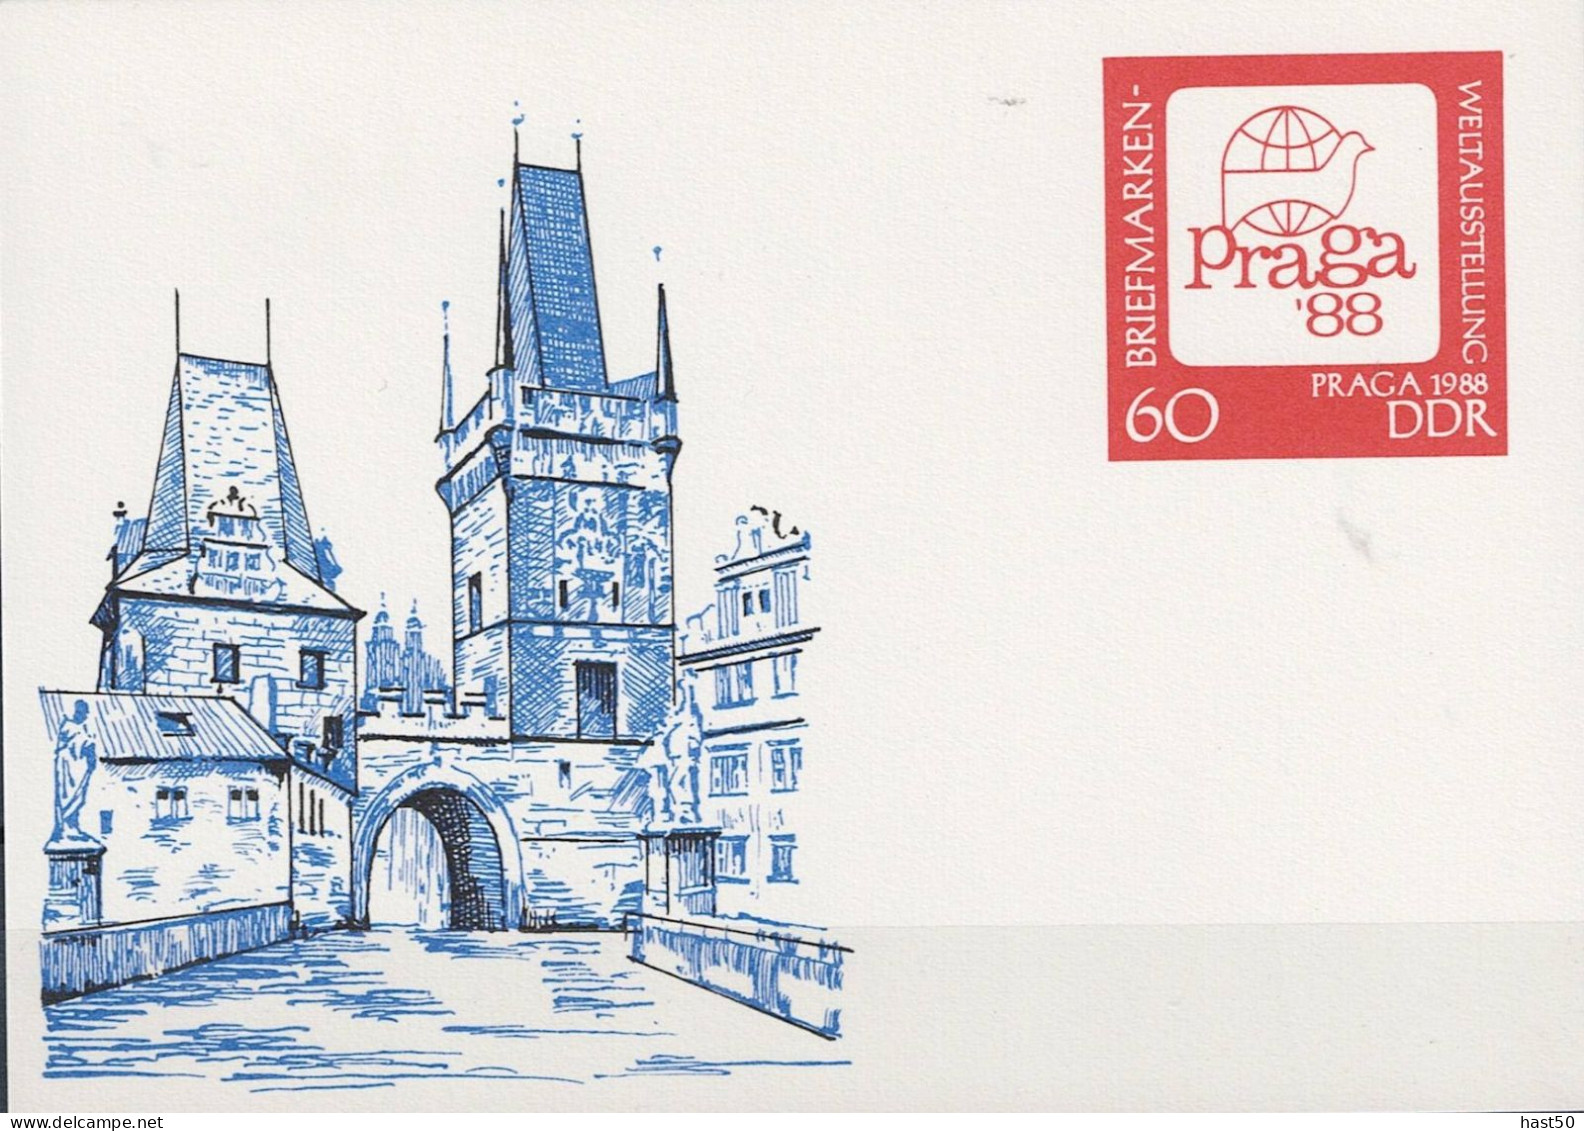 DDR GDR RDA - Sonderpostkarte PRAGA 1988 (MiNr: P 99) 1988 - Ungelaufen - Postcards - Mint